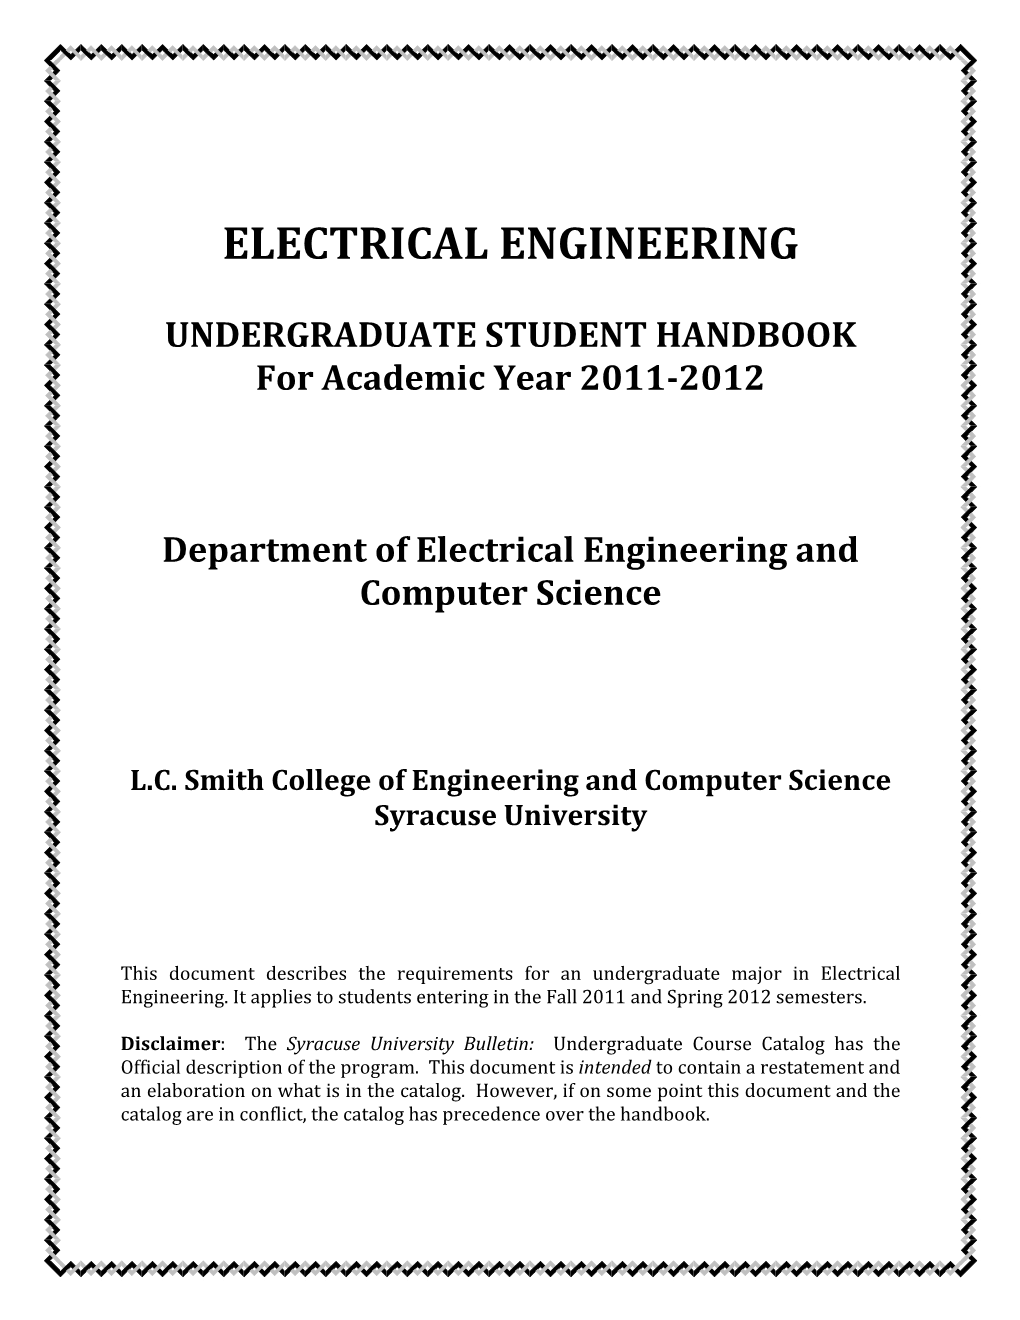 Electrical Engineering Undergraduate Student Handbook